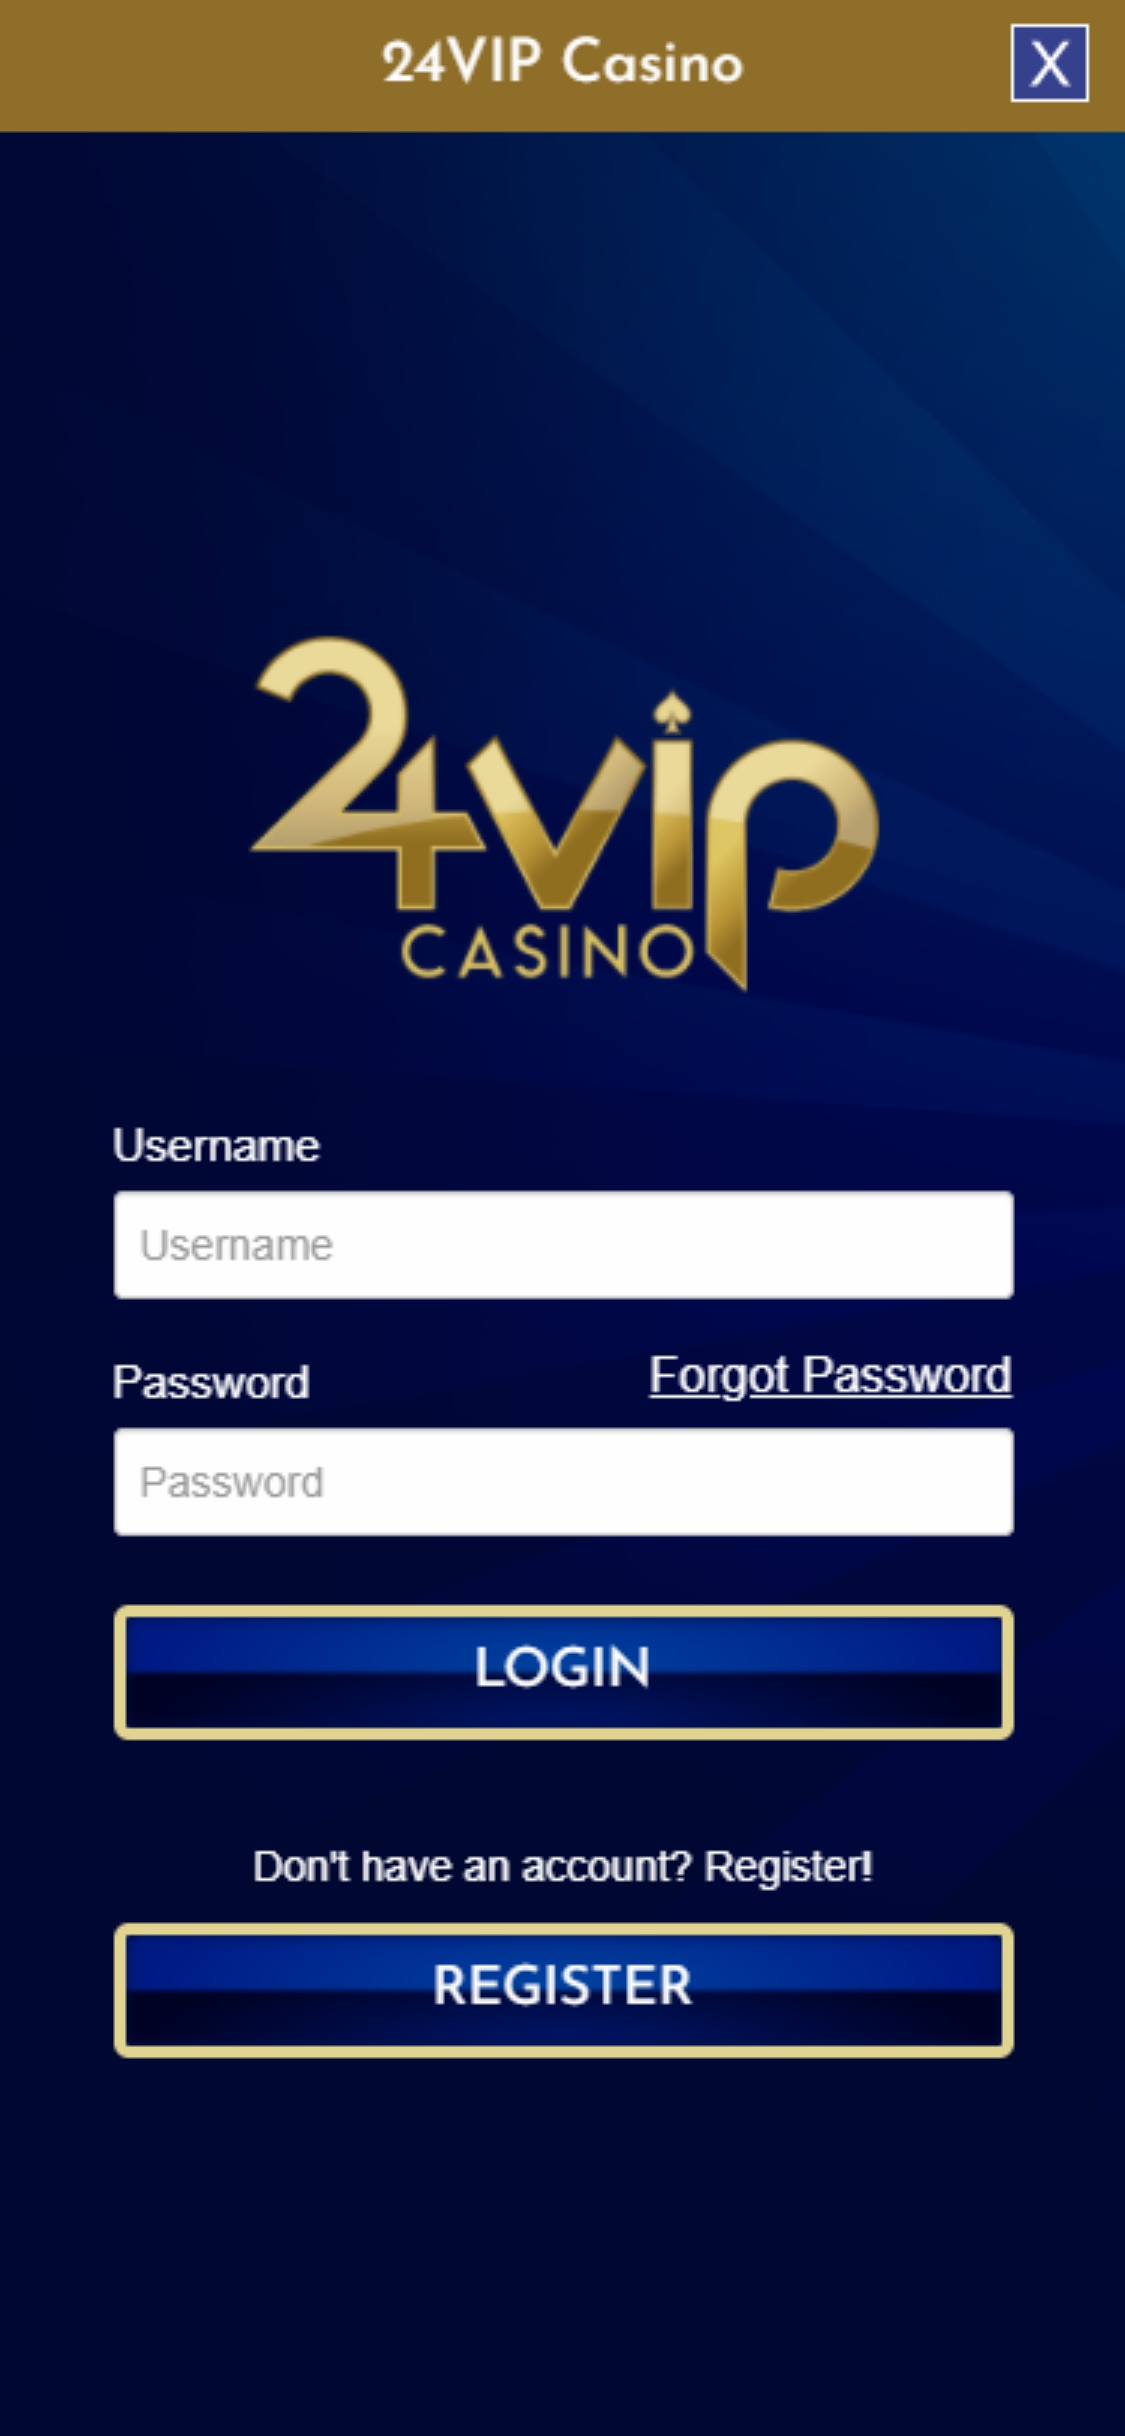 24VIP Casino Mobile Login Review